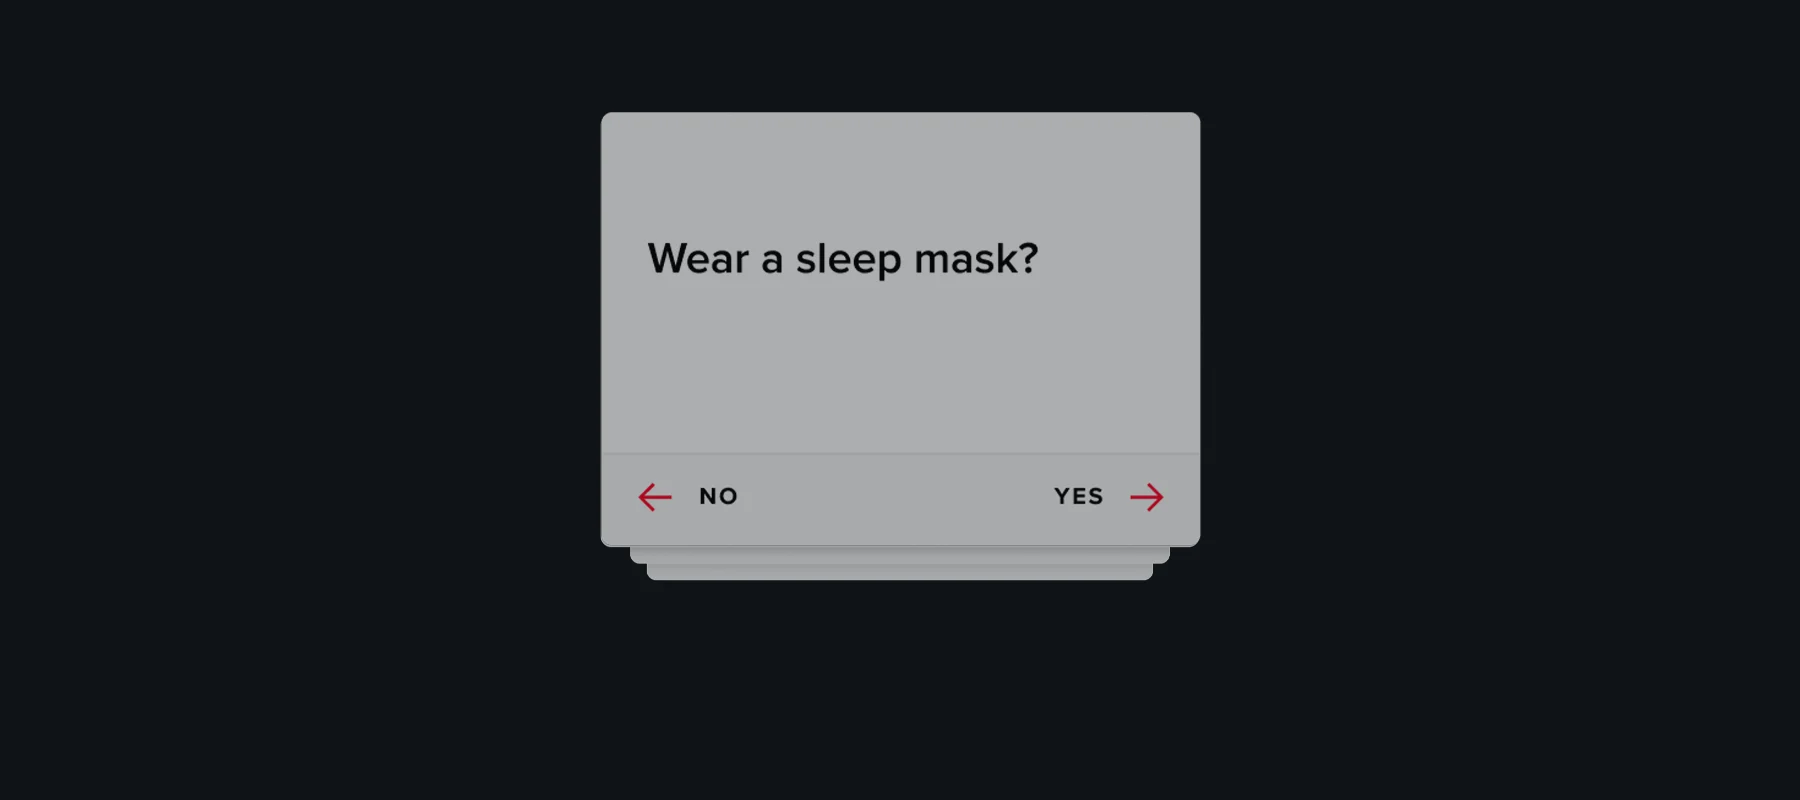 8 Benefits to Wearing a Sleep Mask